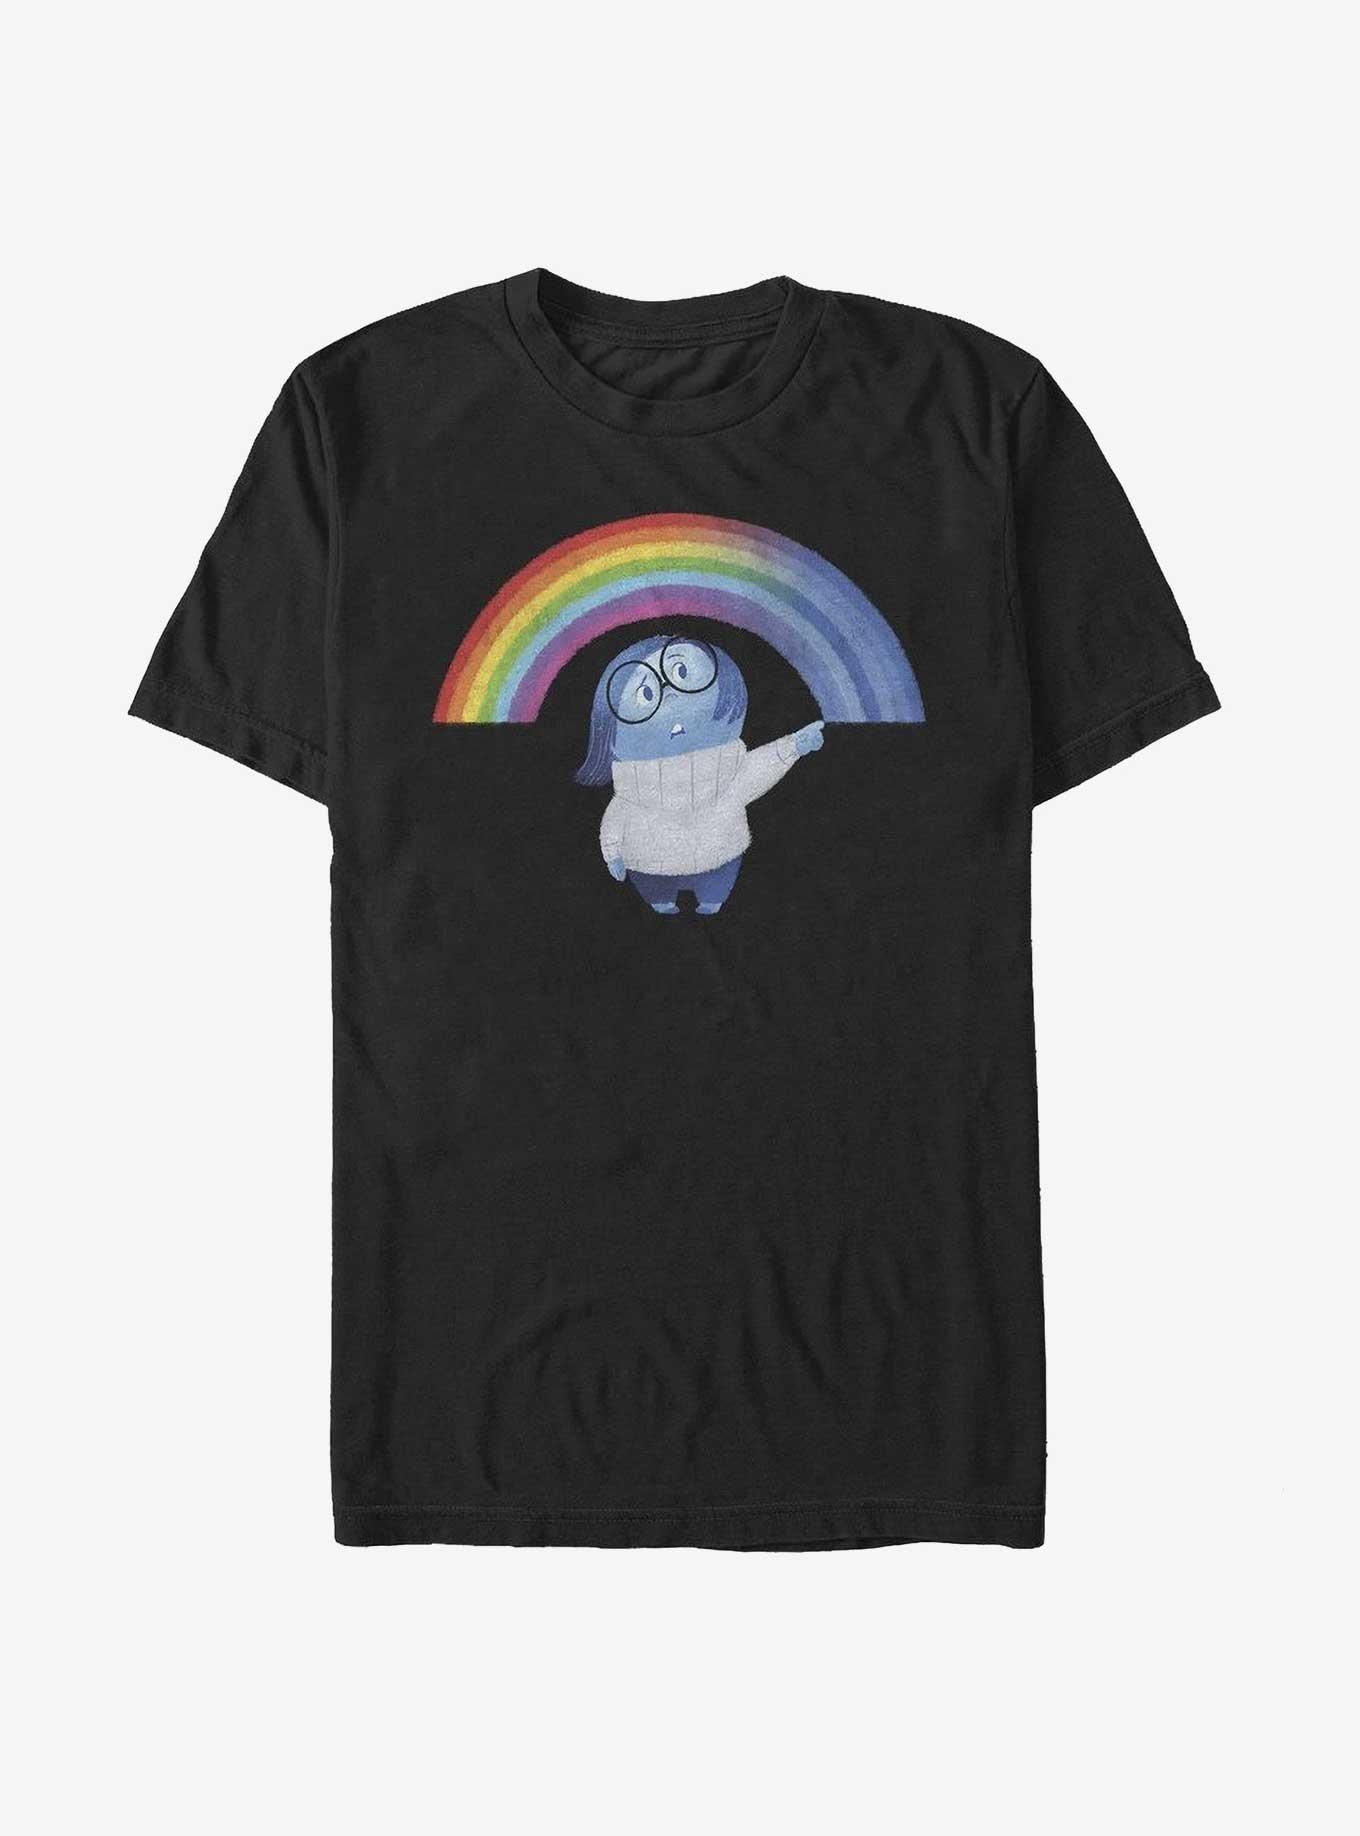 Disney Pixar Inside Out 2 Sadness Rainbow T-Shirt, BLACK, hi-res